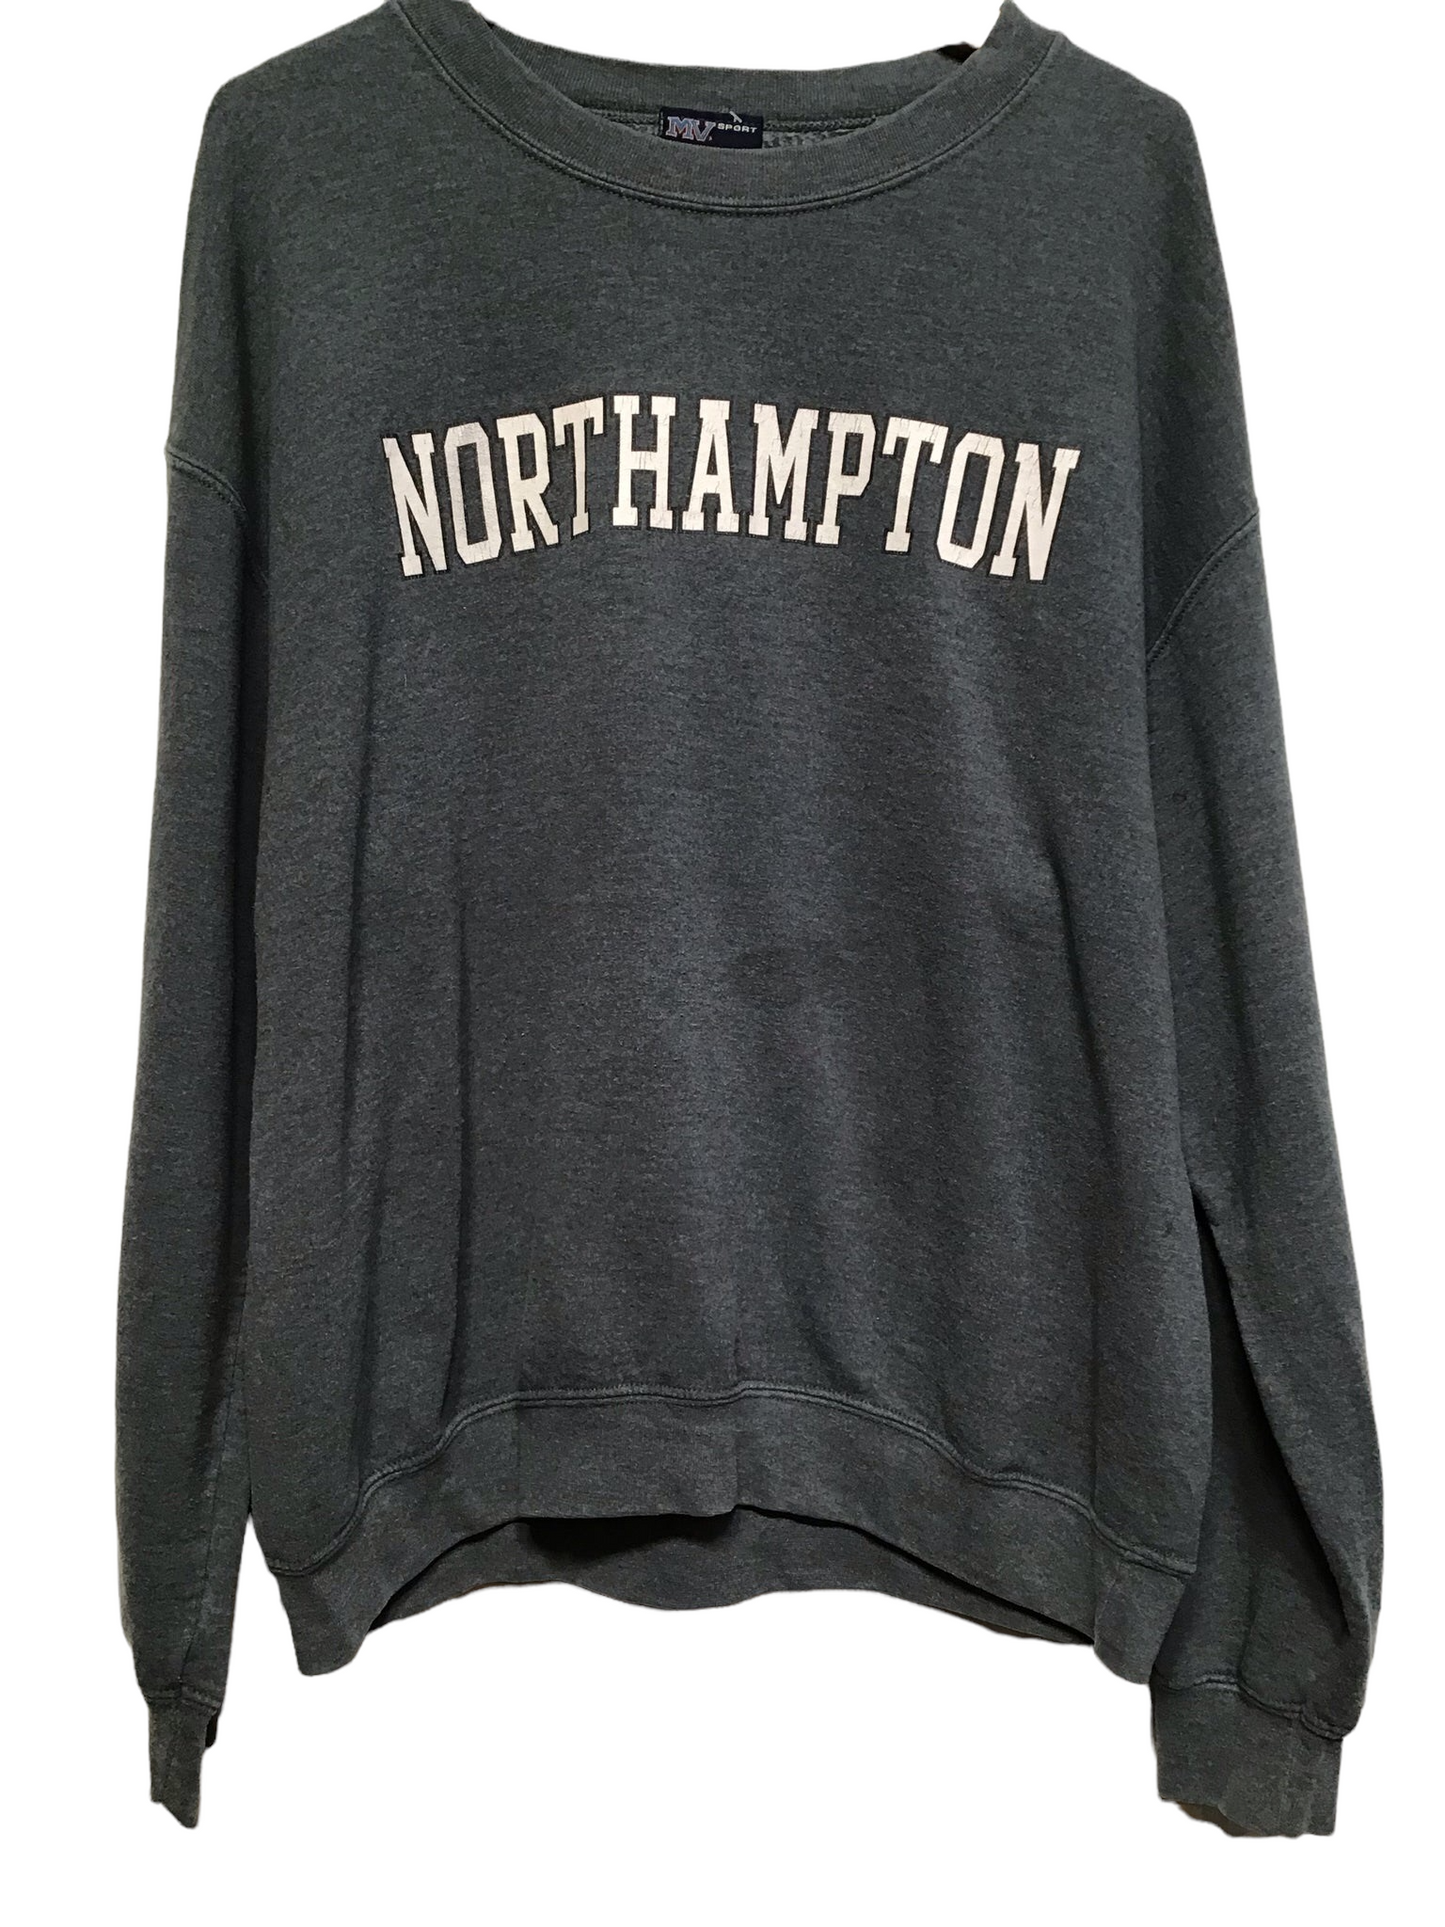 Northampton College Sweatshirt (Size L)